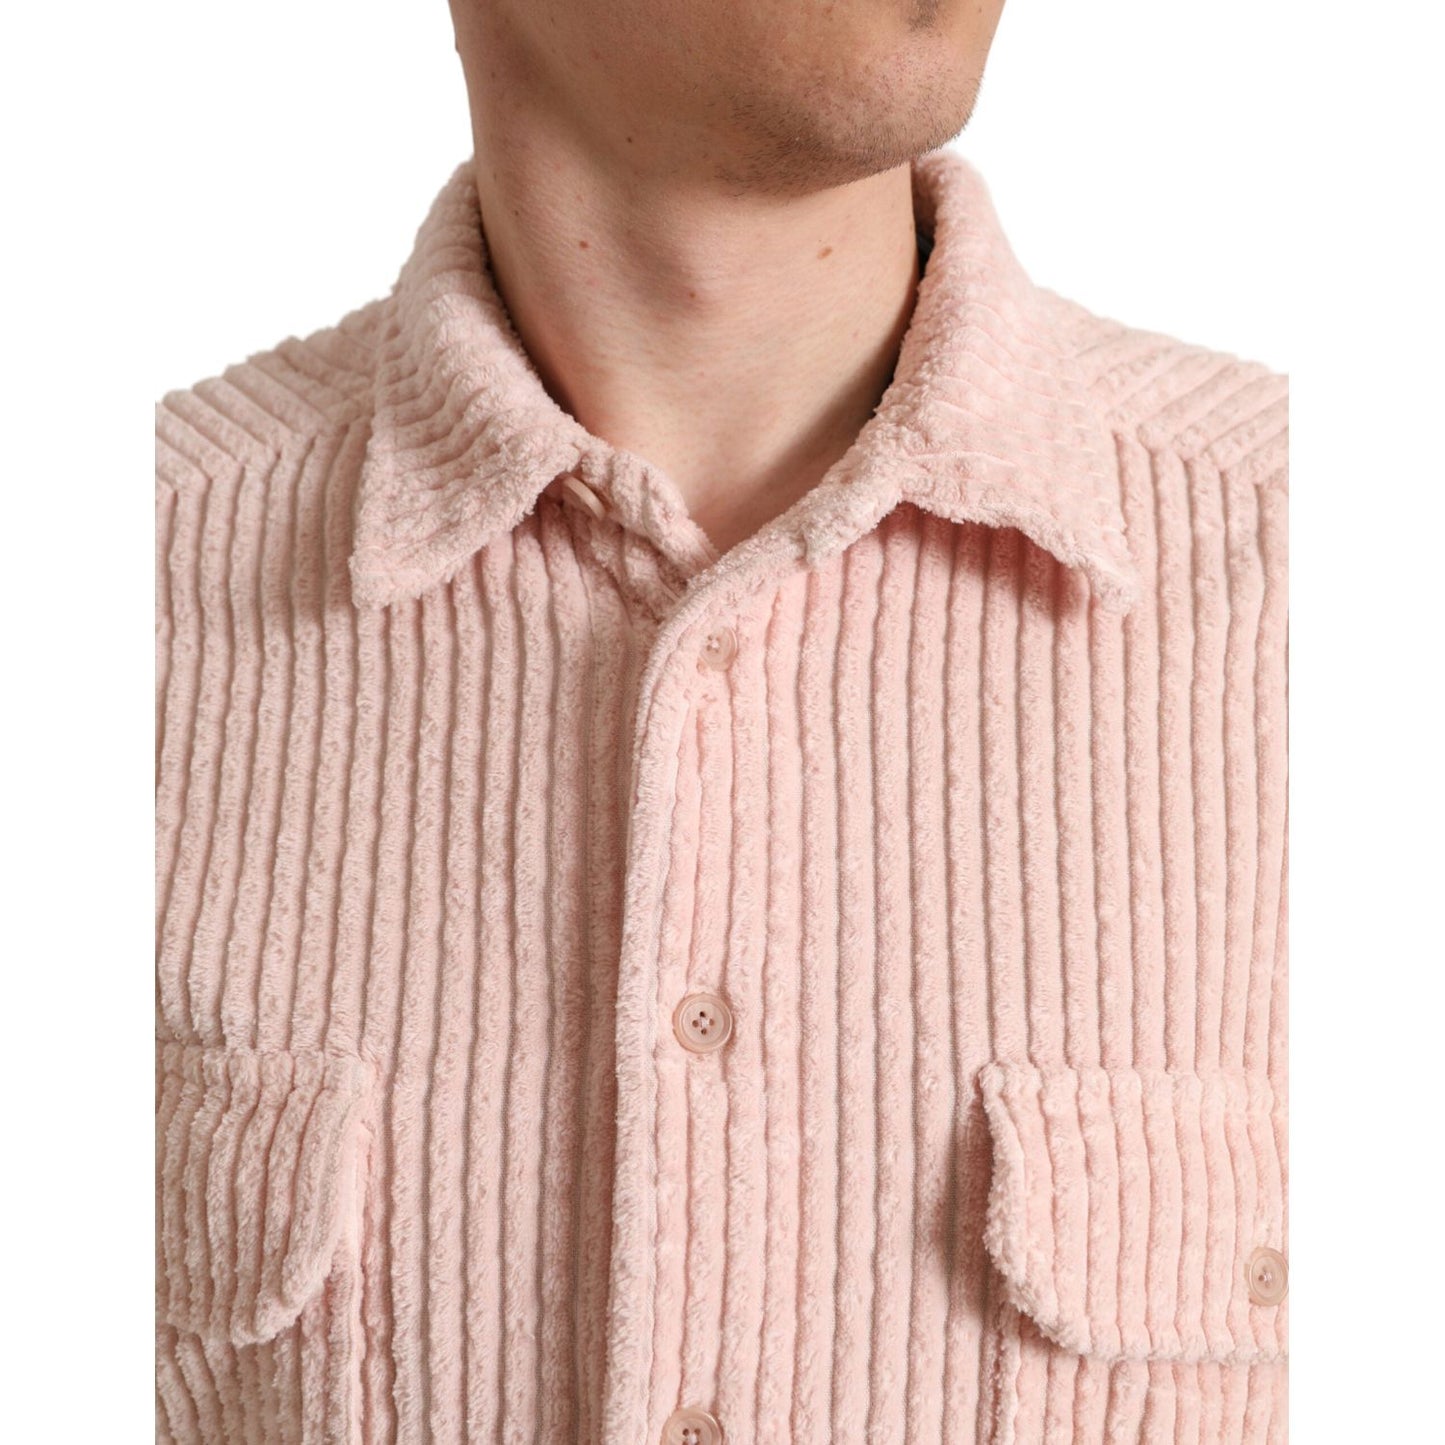 Dolce & Gabbana Elegant Cotton Shirt Sweater in Pink pink-cotton-collared-button-shirt-sweater 465A1971-BG-scaled-5bd4ec07-b46.jpg